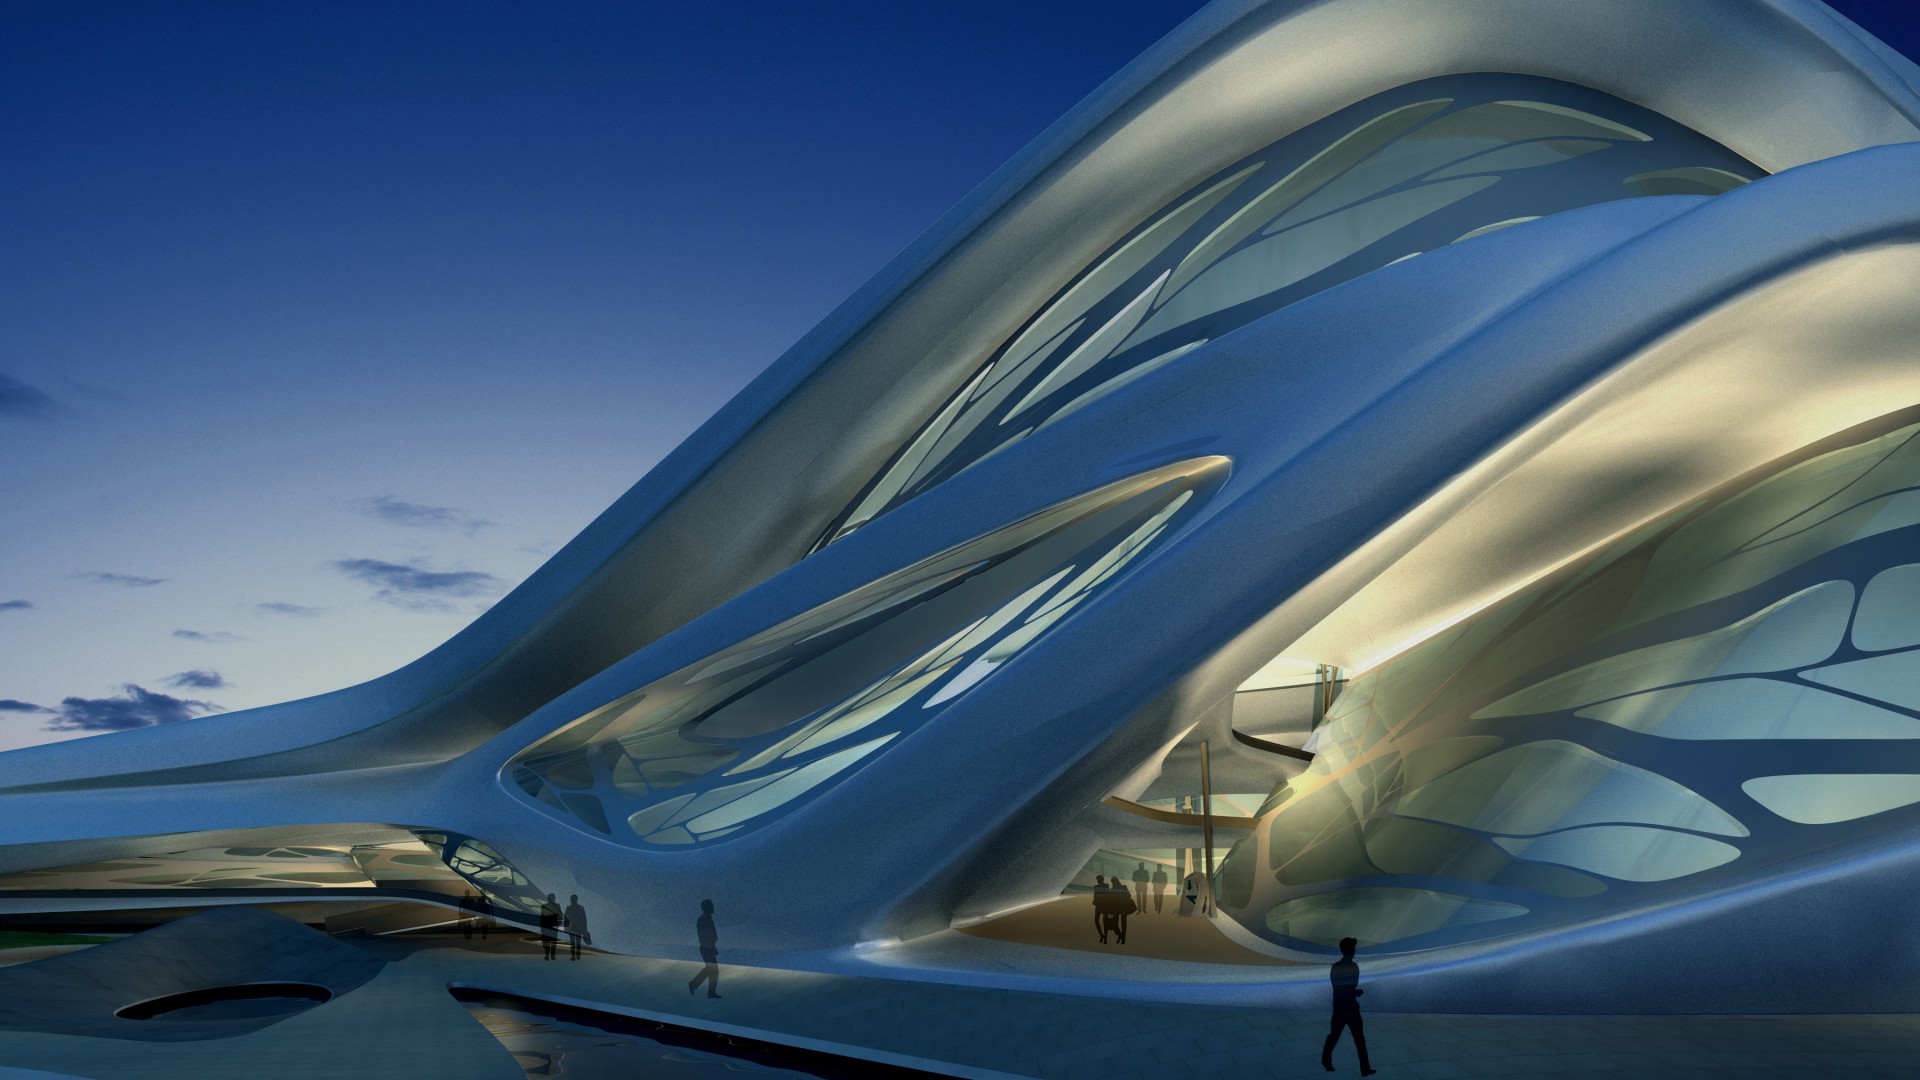 Abu Dhabi Performing Arts Center, UAE, tourism, travel, steel, glass (horizontal)